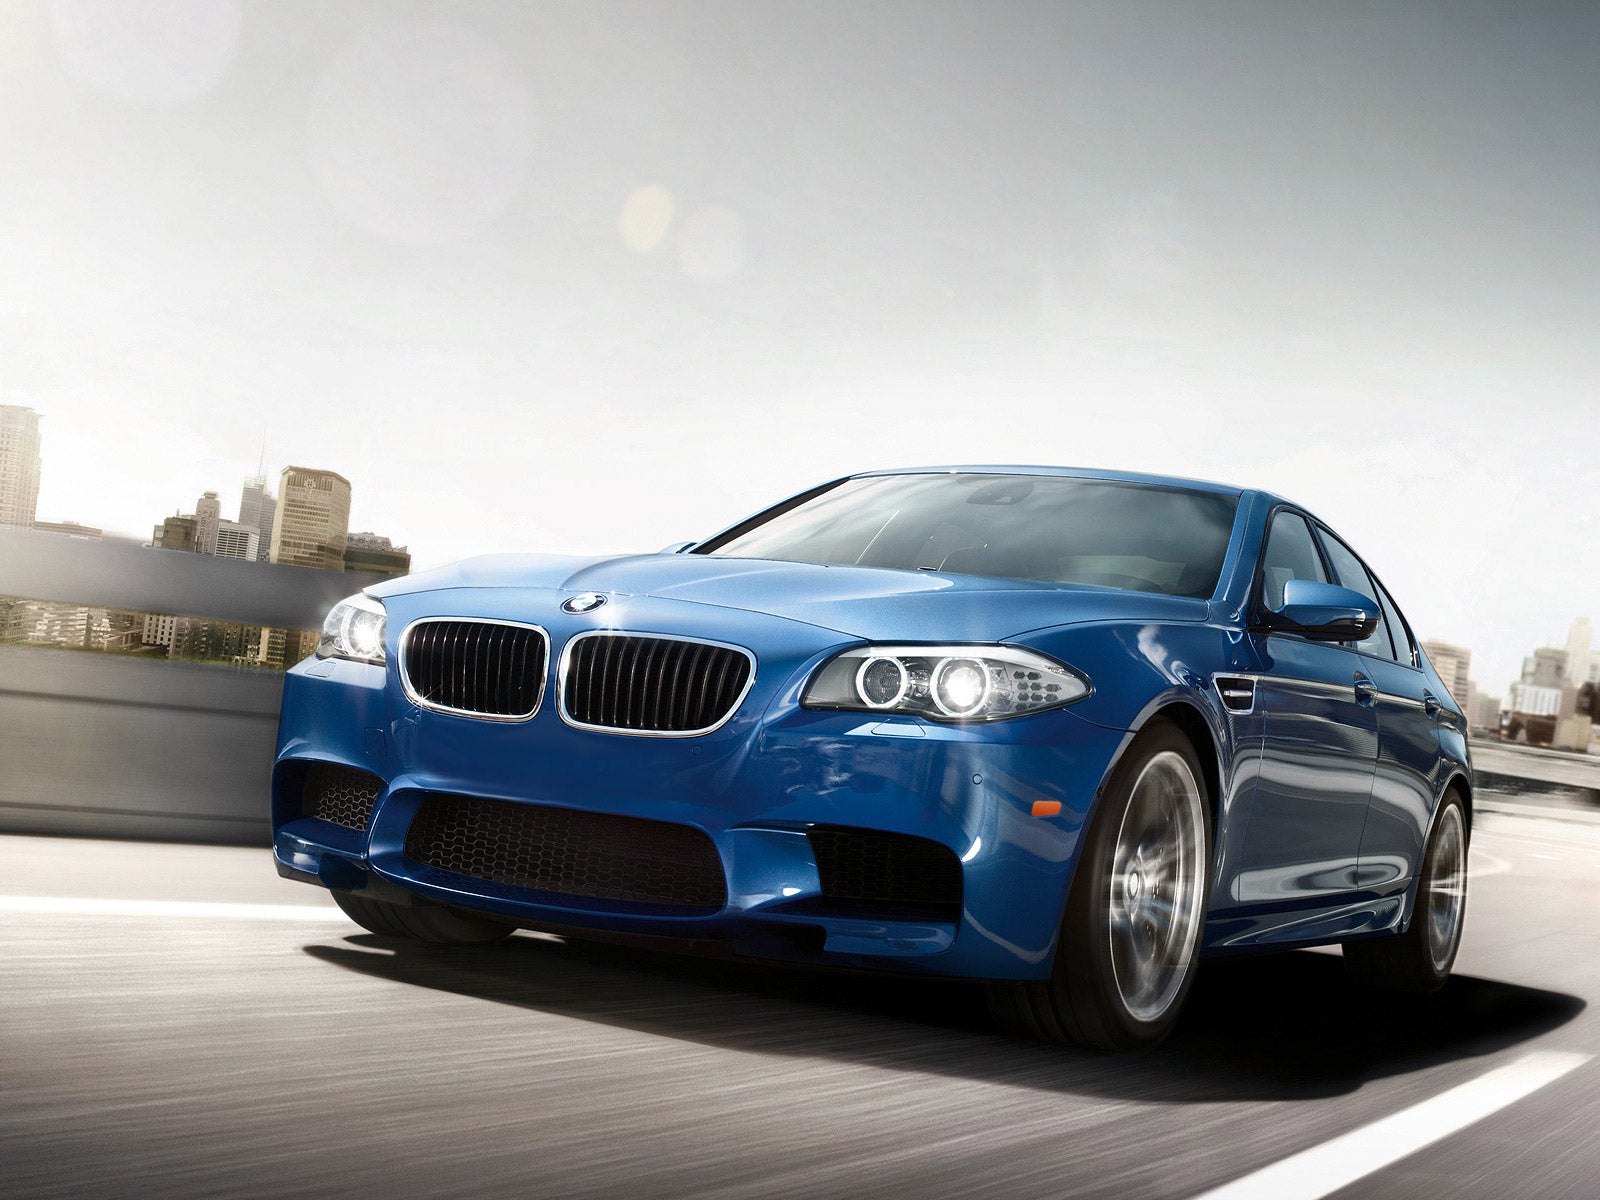 2012 BMW M5 - Review - CarGurus